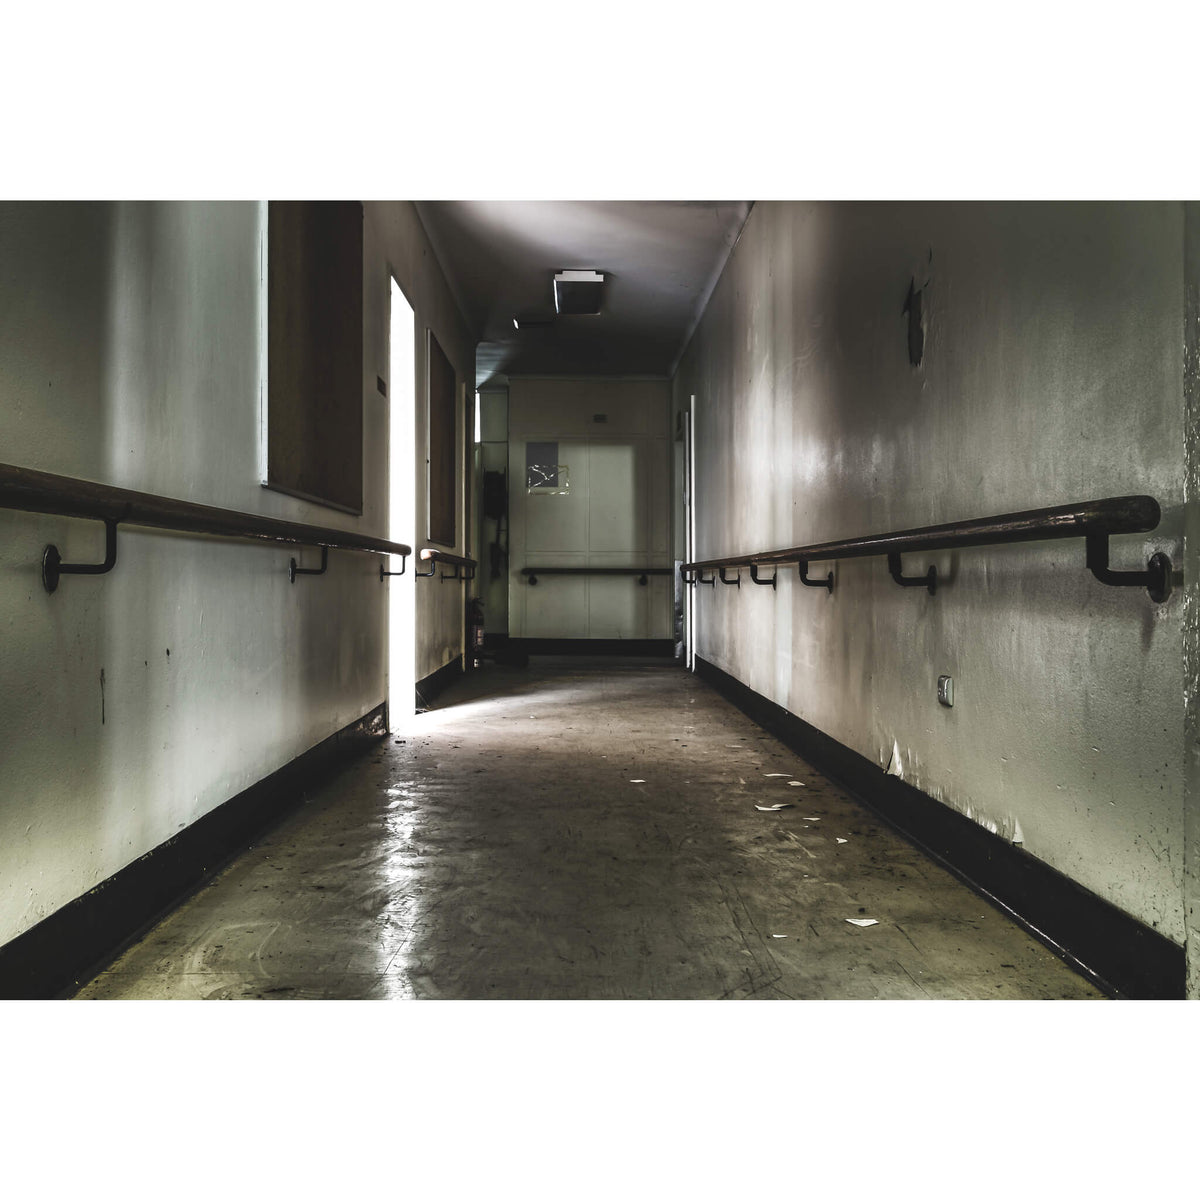 Ward Hallway 2 | Callan Park